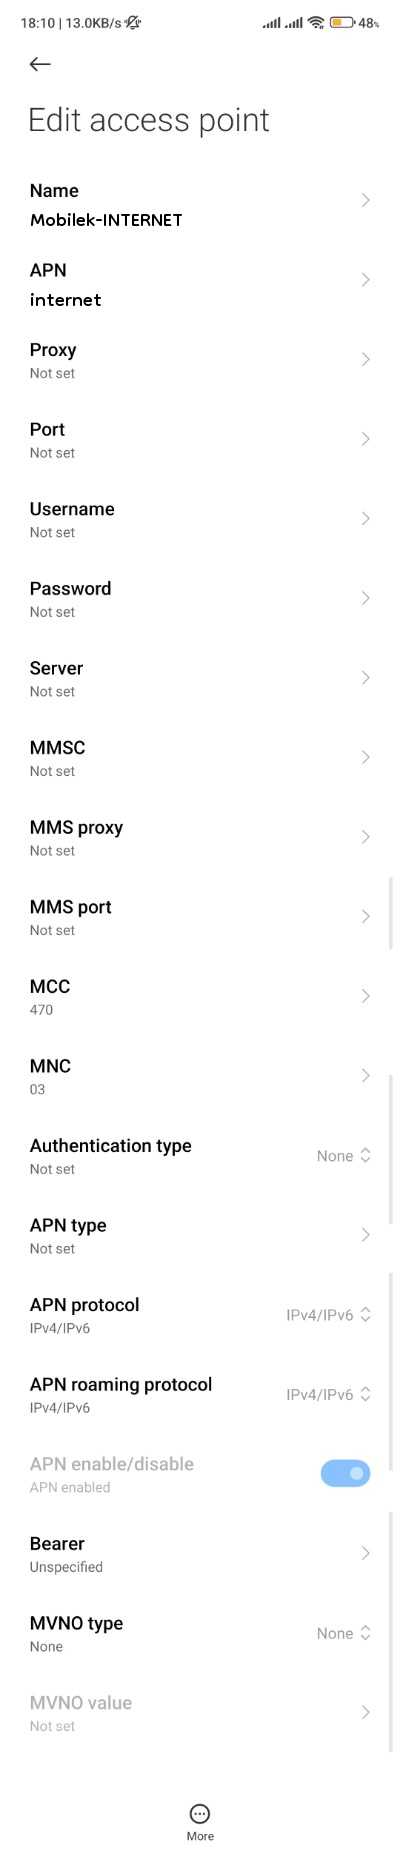 Mobilek APN Setiings for Android iPhone 3G 4G Internet